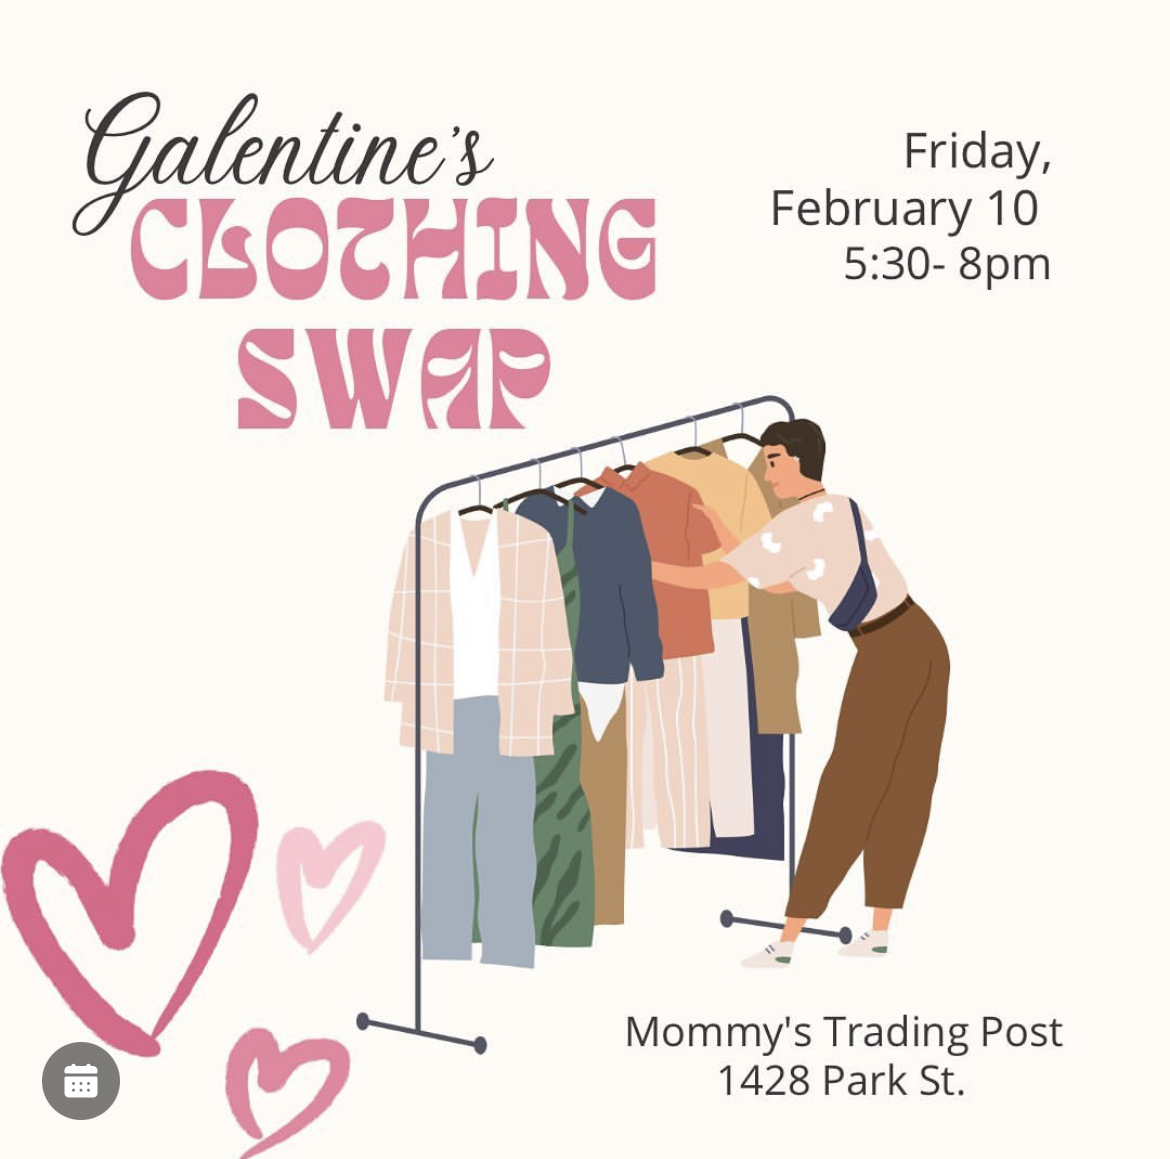 Galentine's Clothing Swap